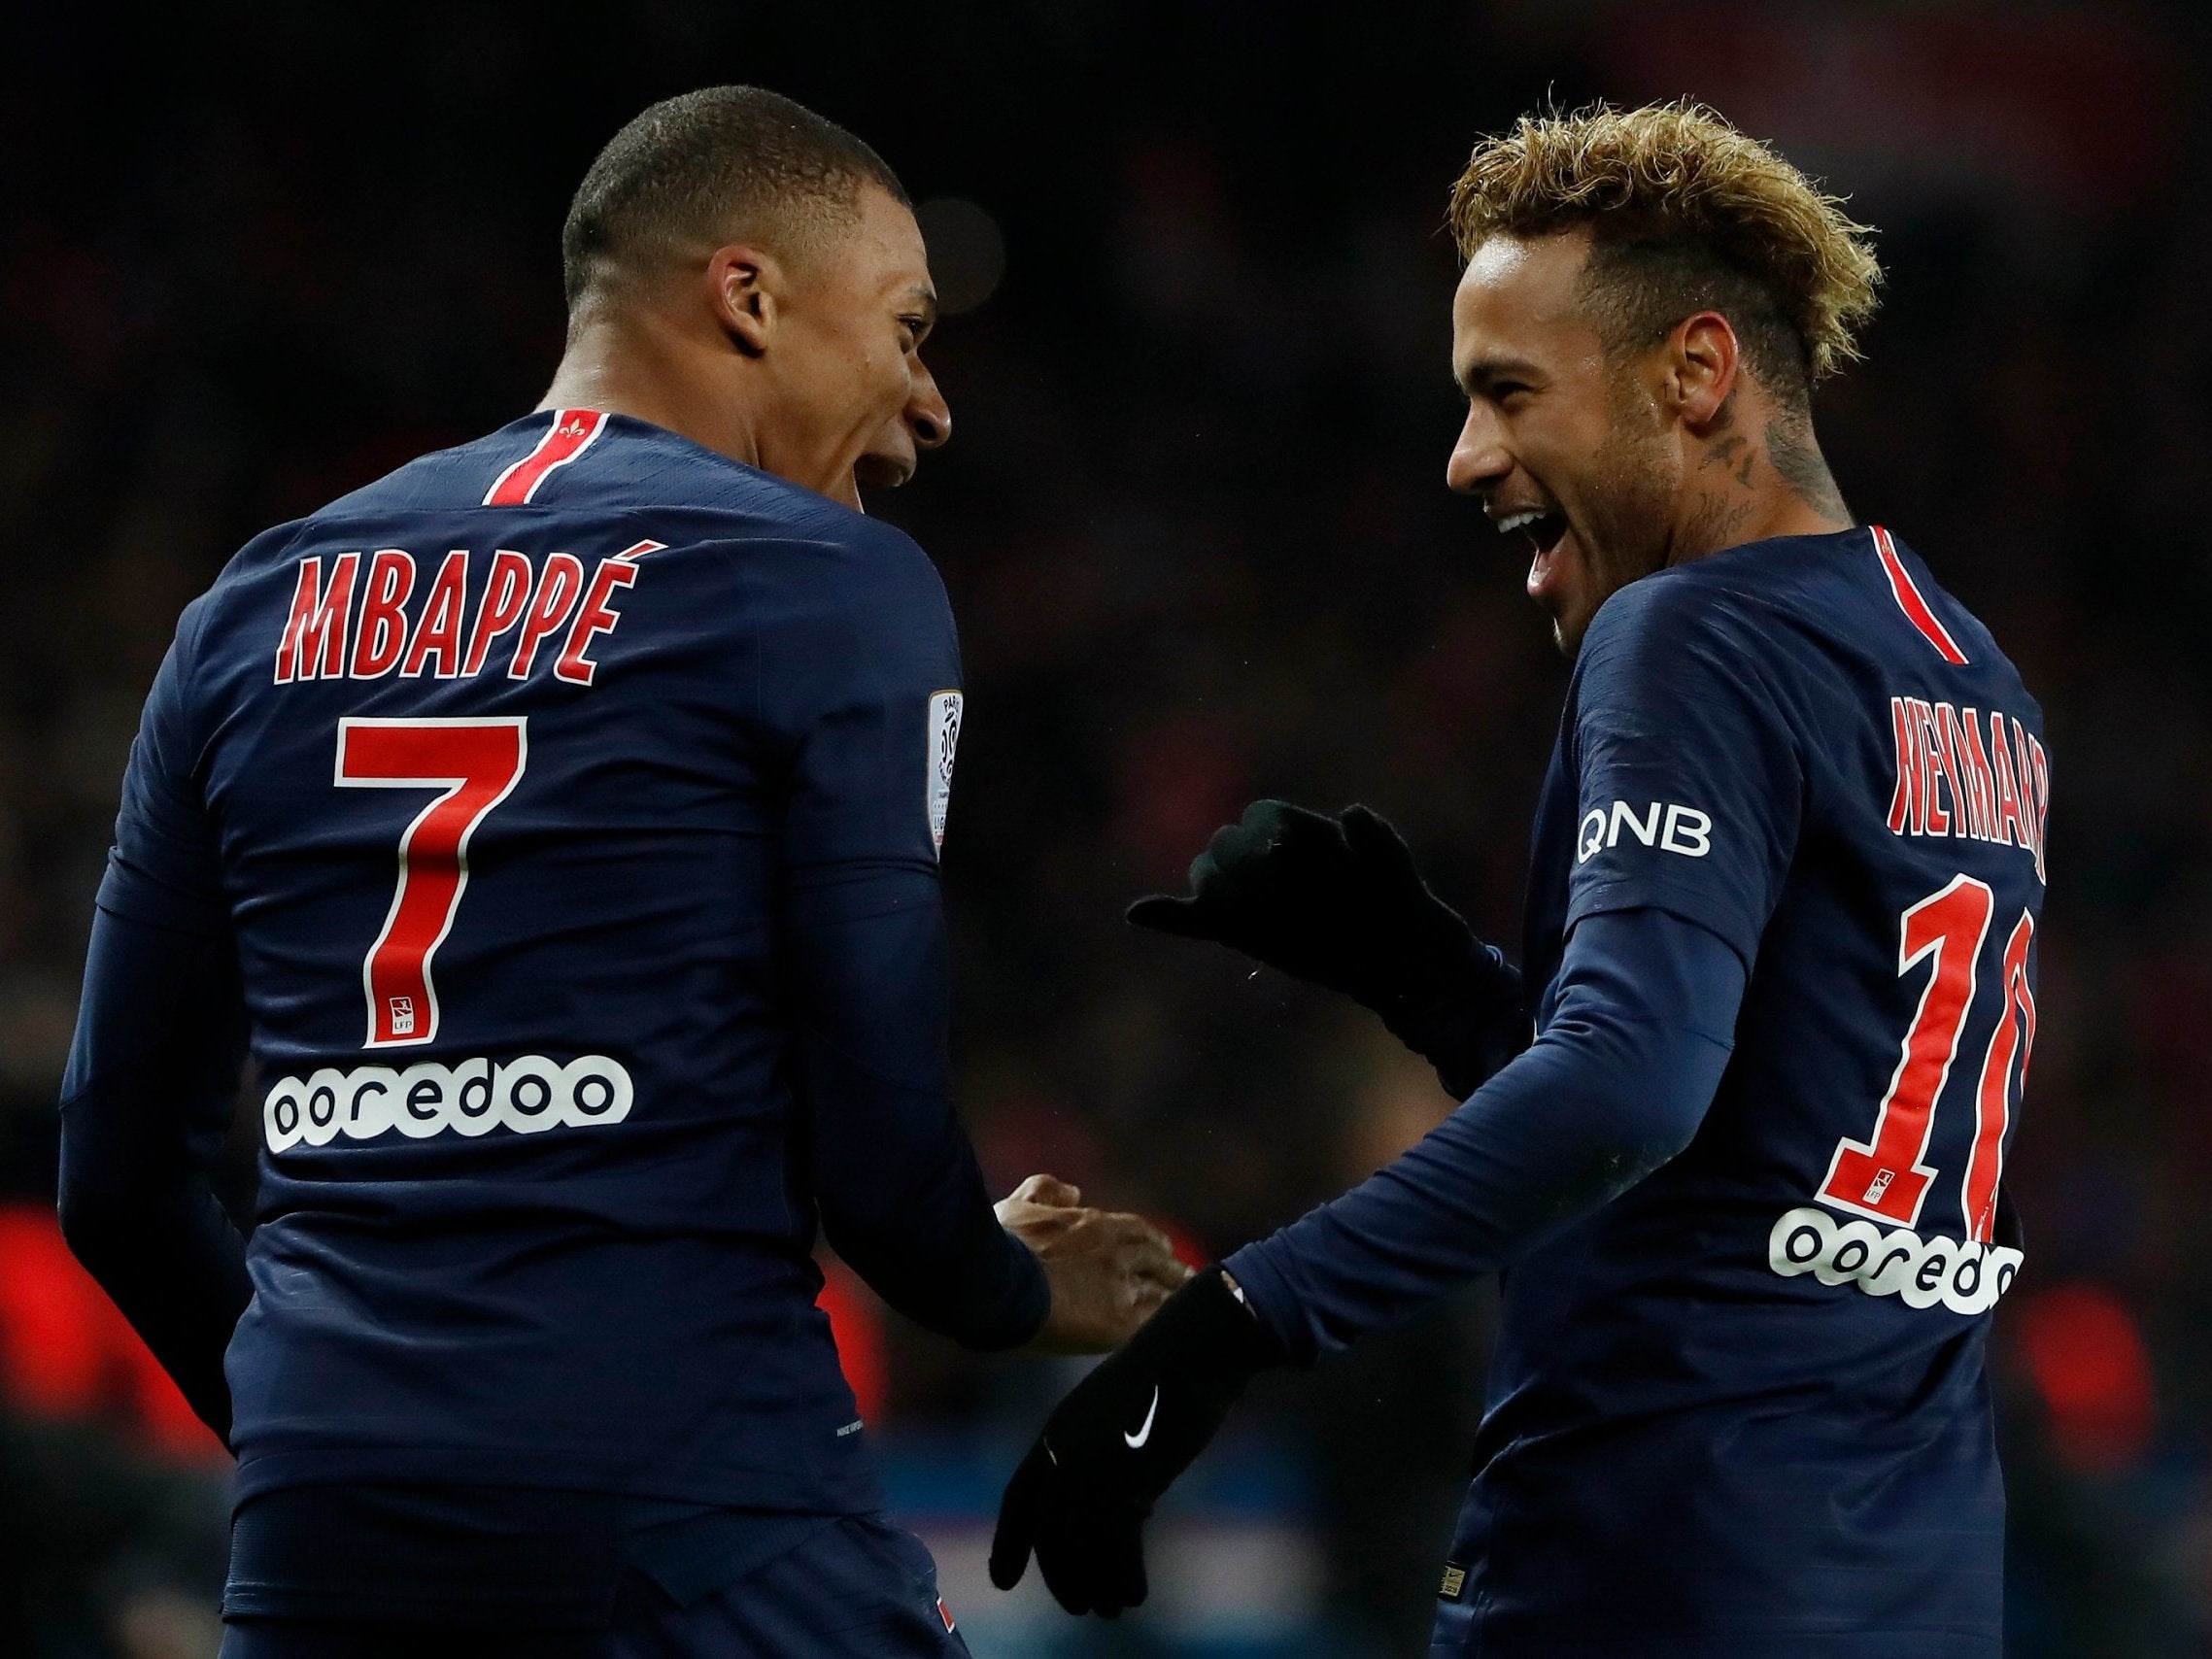 Paris Saint-Germain set European record with 12th consecutive win to start Ligue 1 season